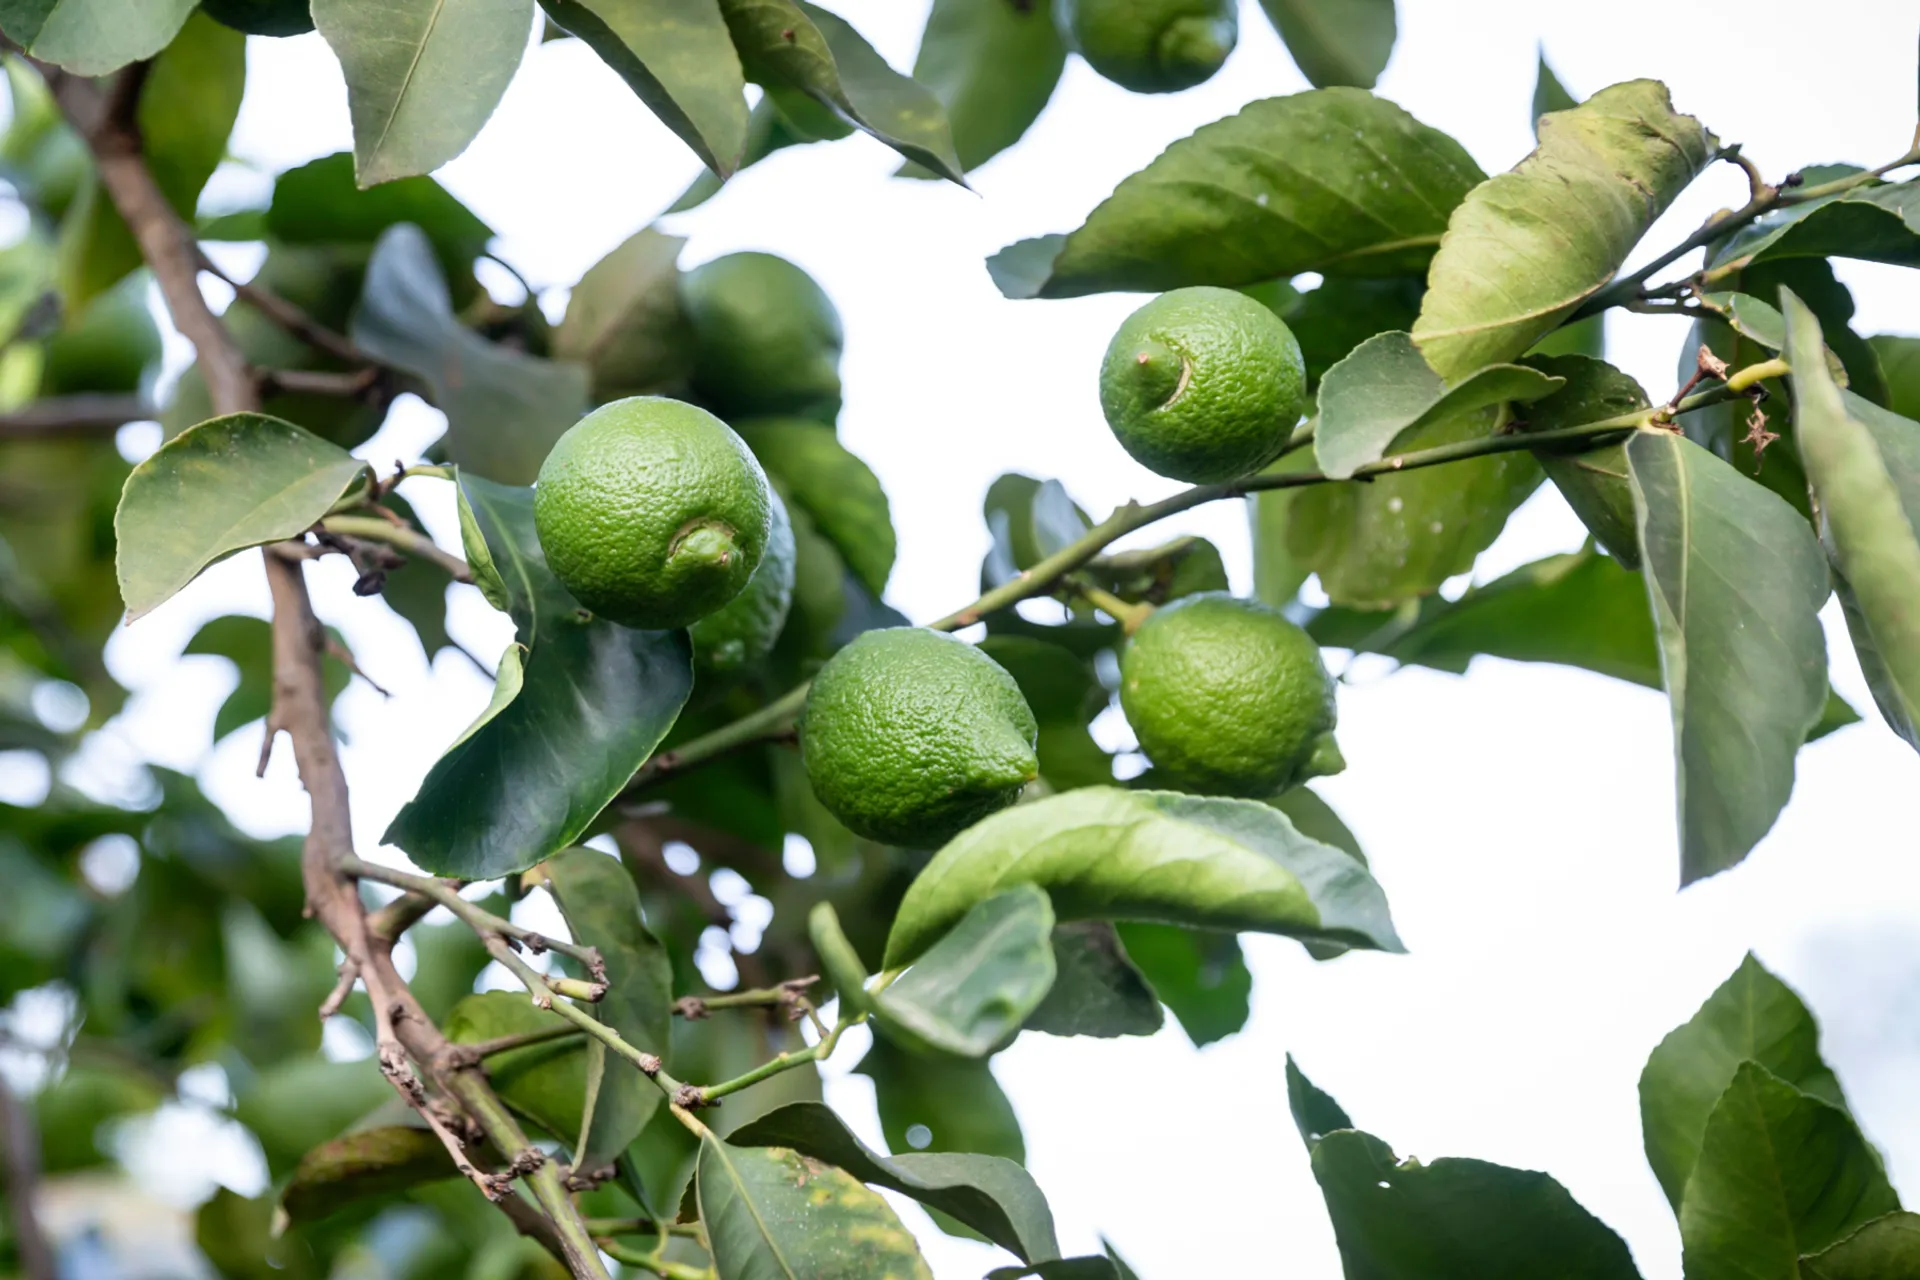 Olkerii Organic Rough Lemons - 500g (Limited Supply) - Greenspoon